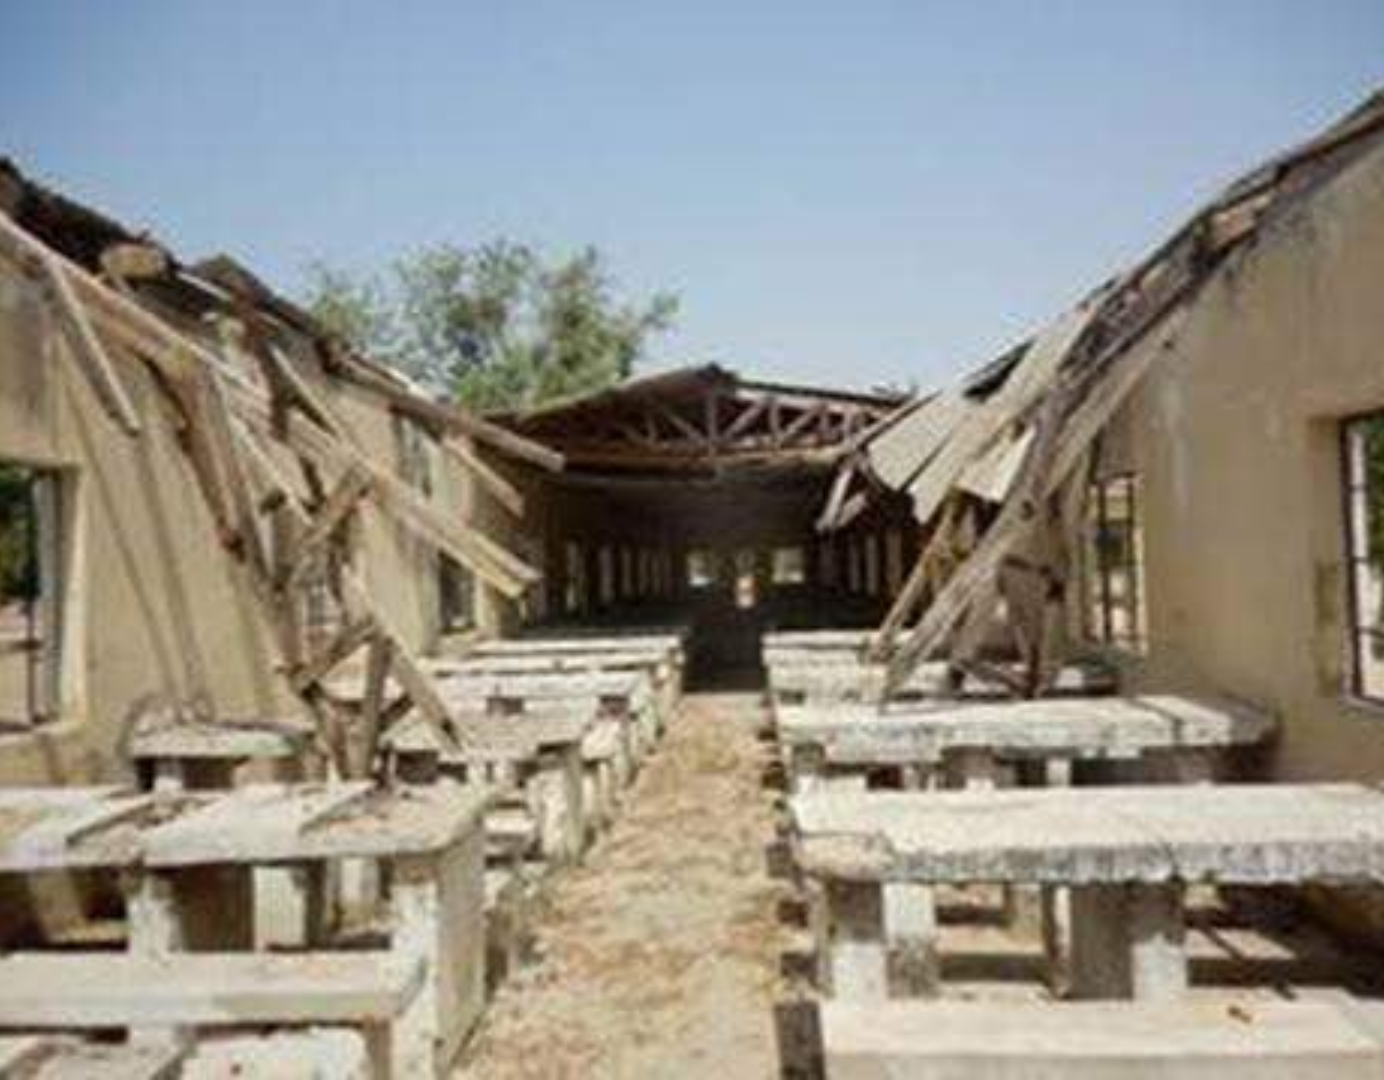 The school before it was rebuilt